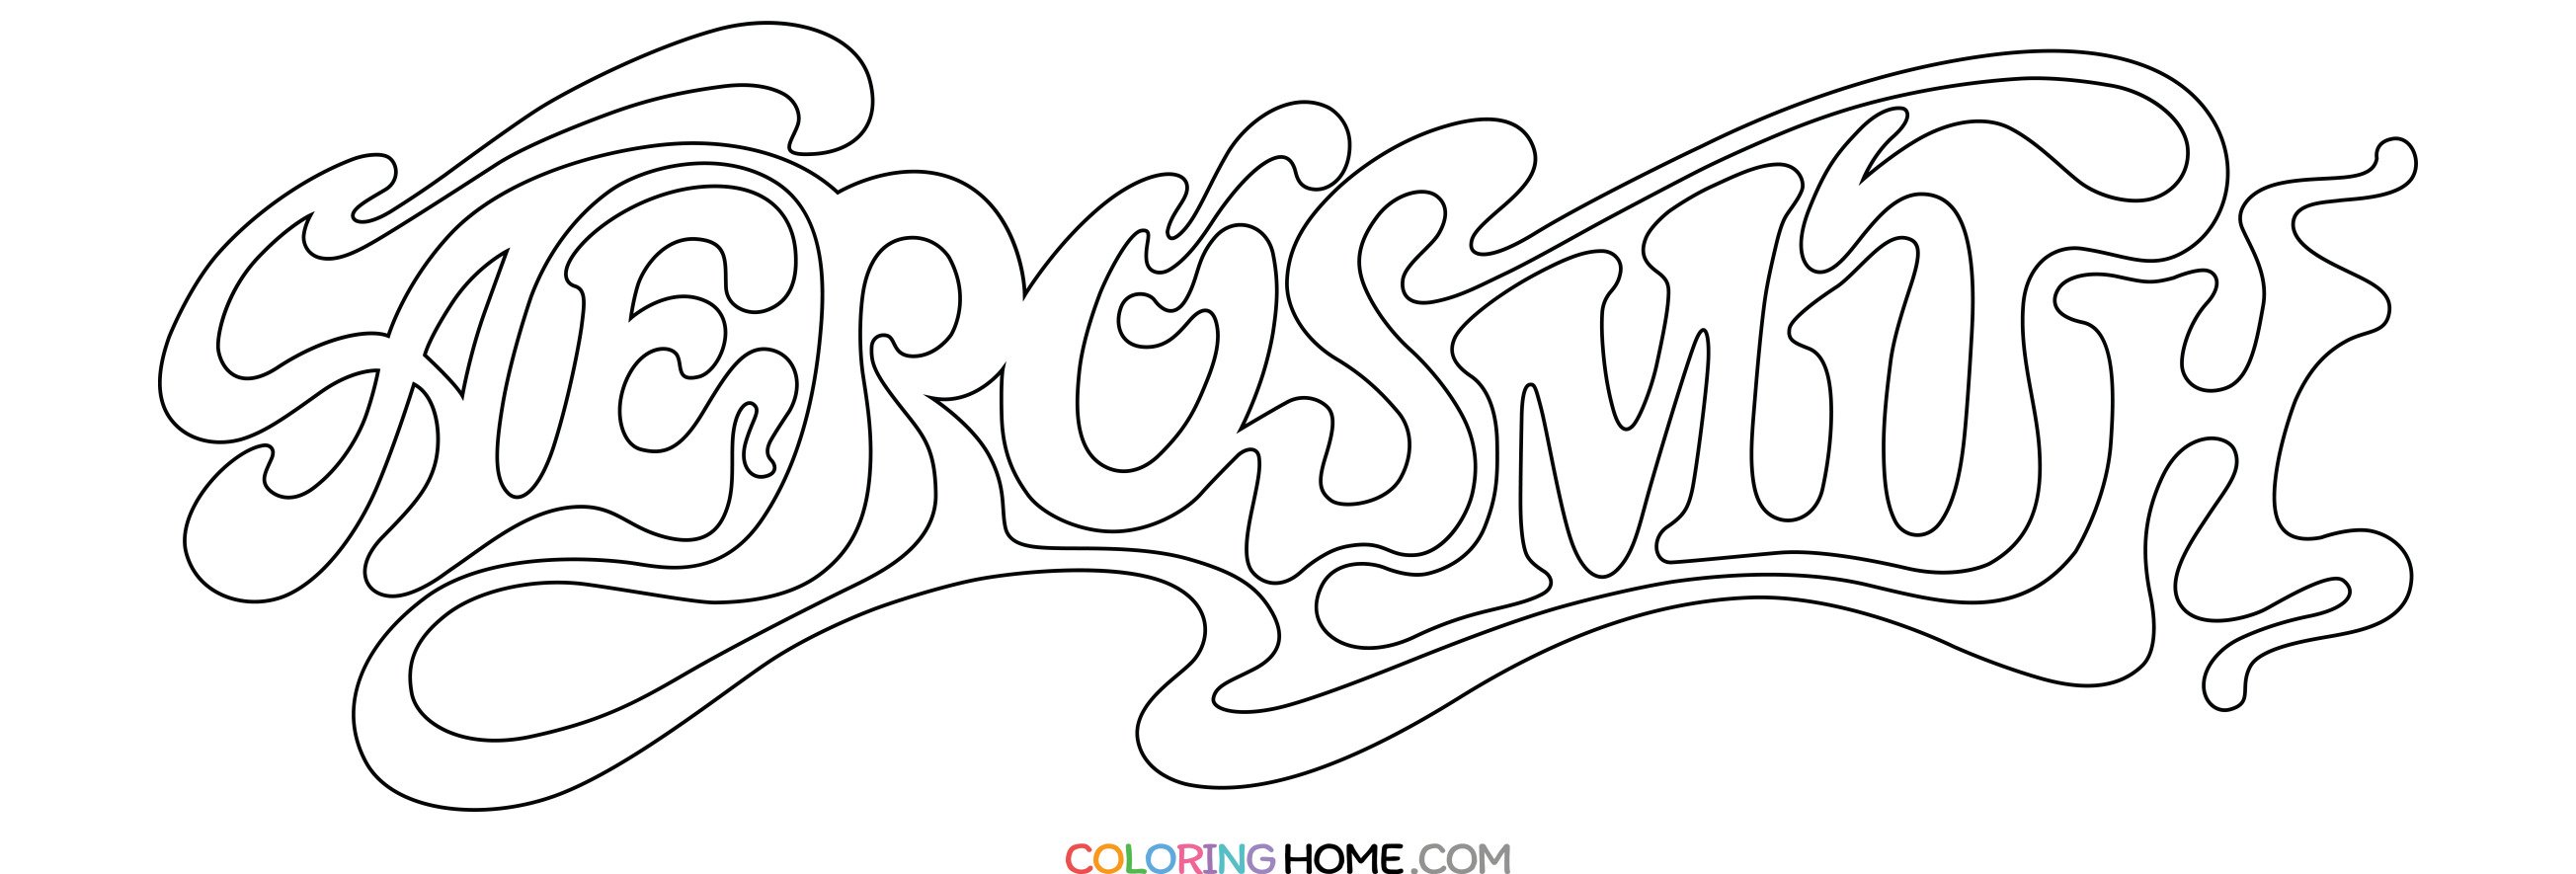 Aerosmith coloring page